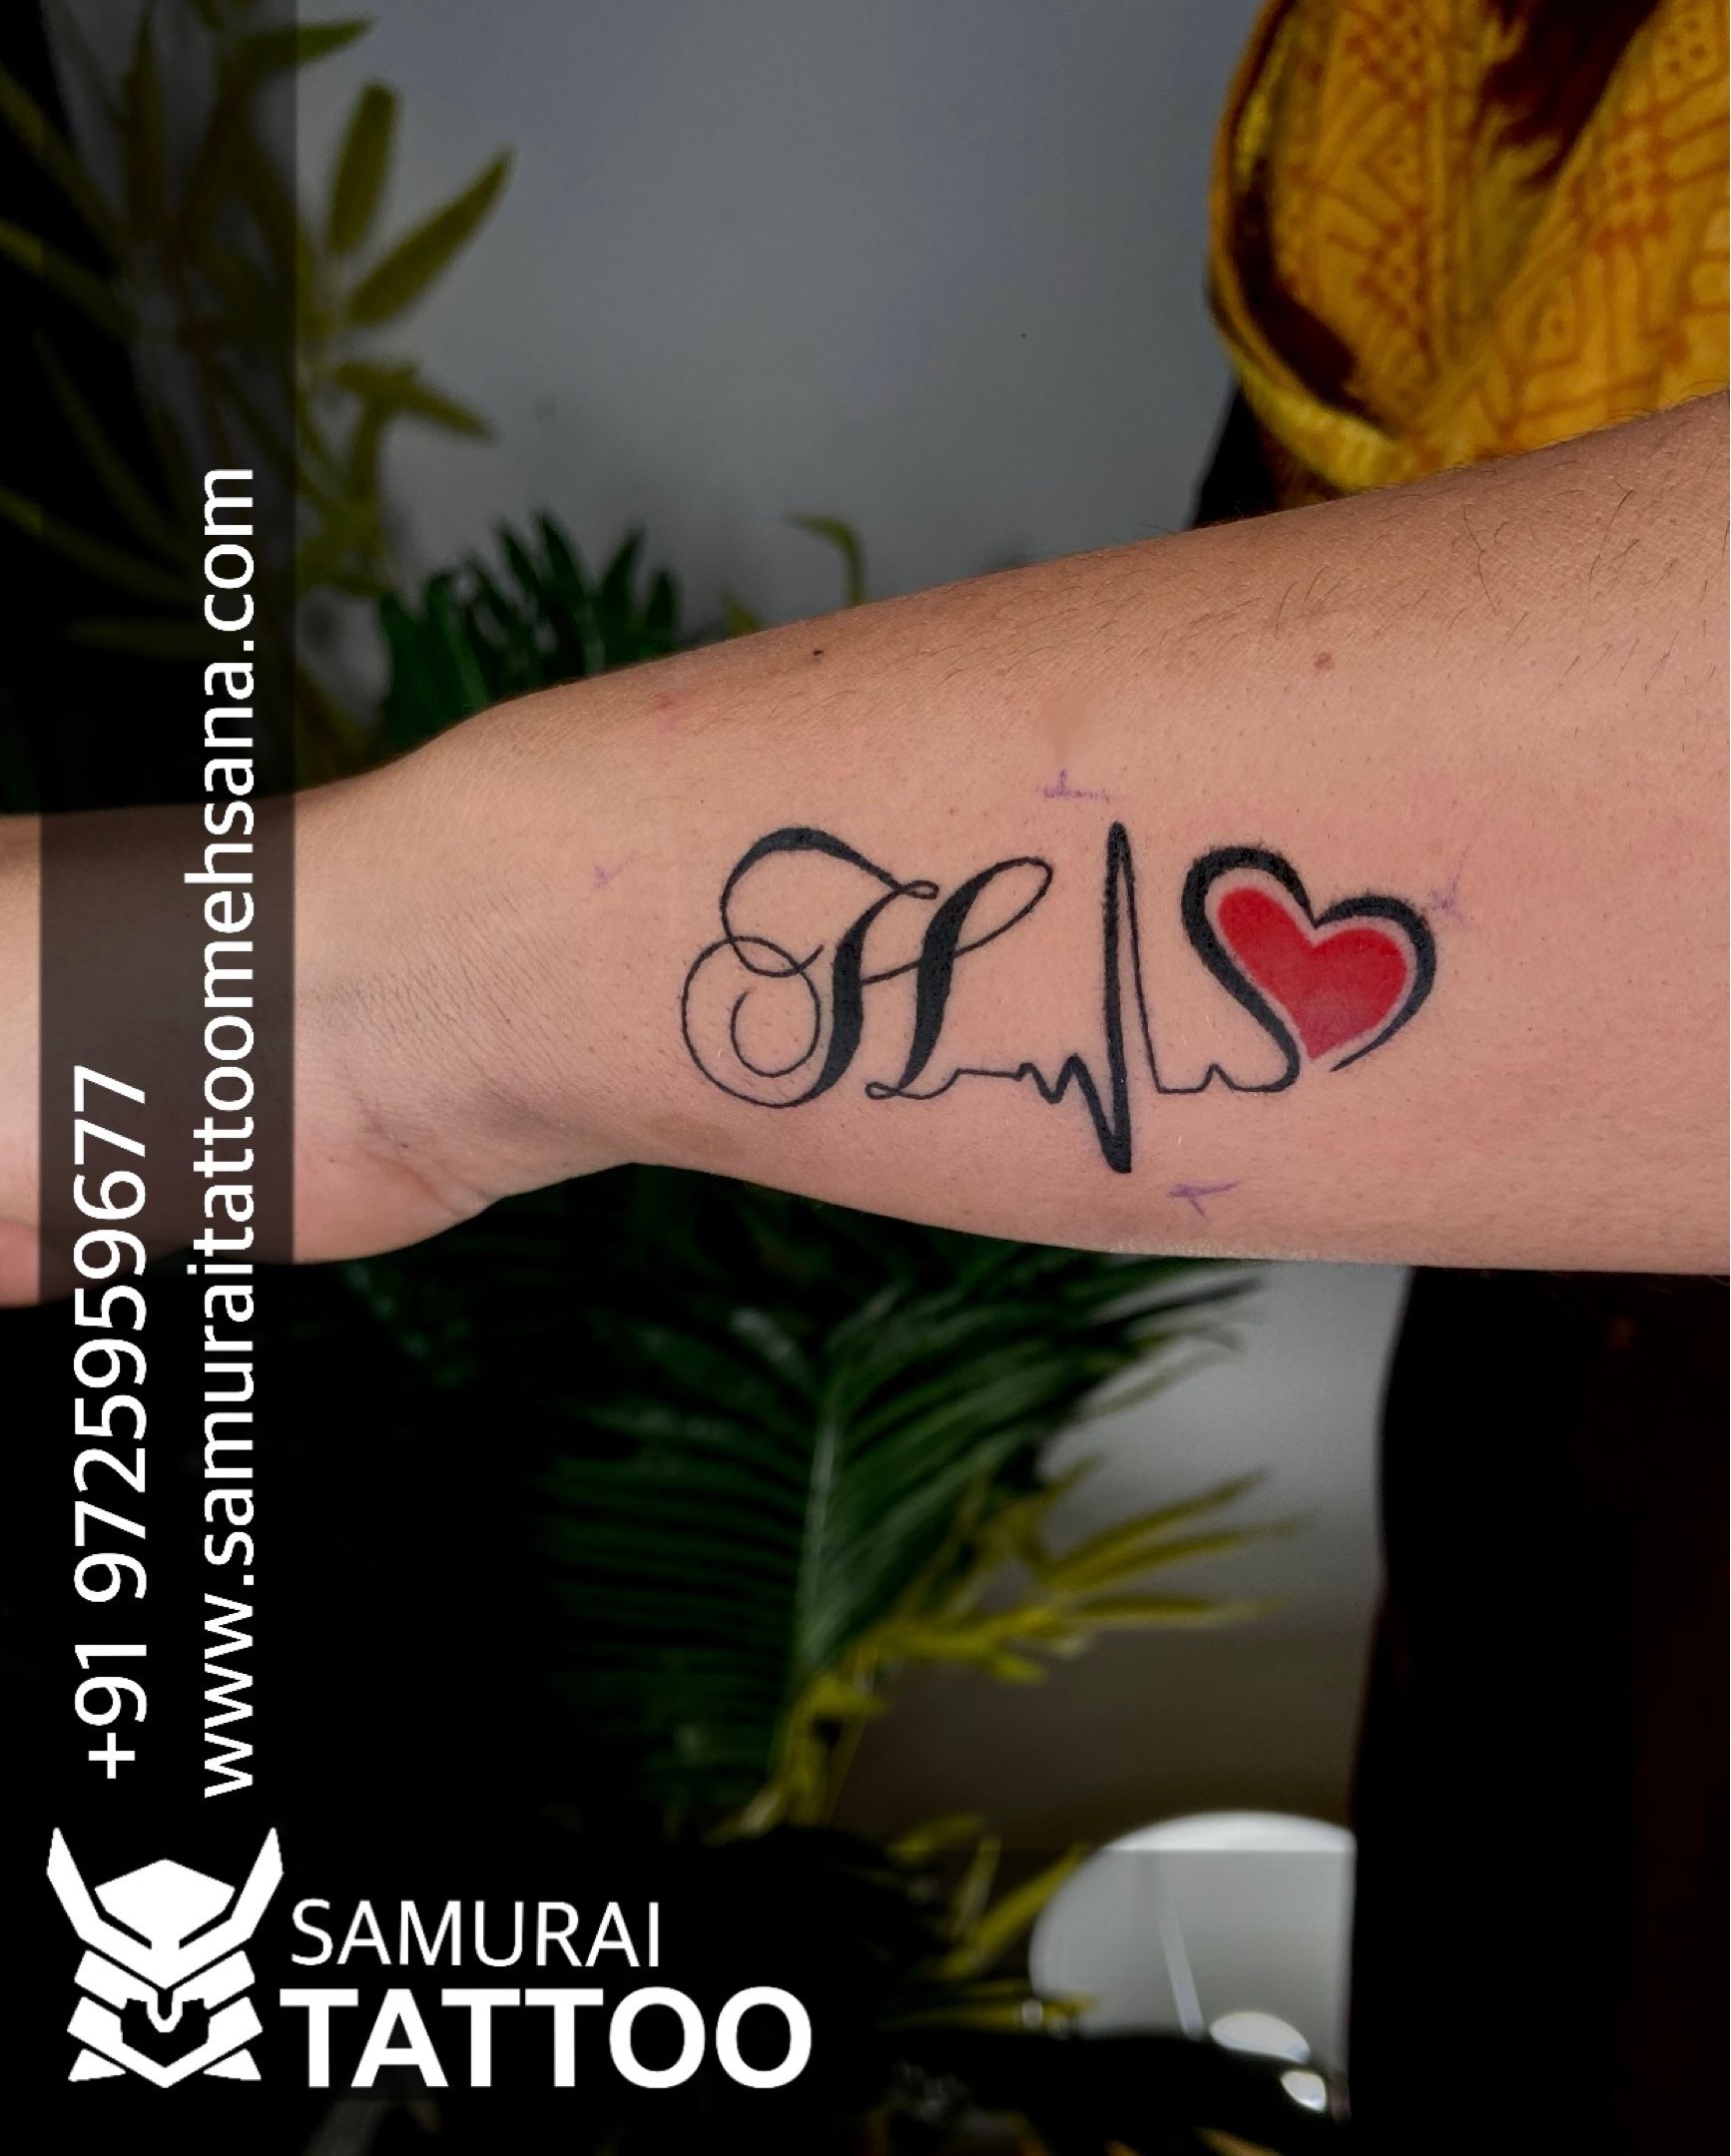 Share 87 about ap love tattoo latest  indaotaonec